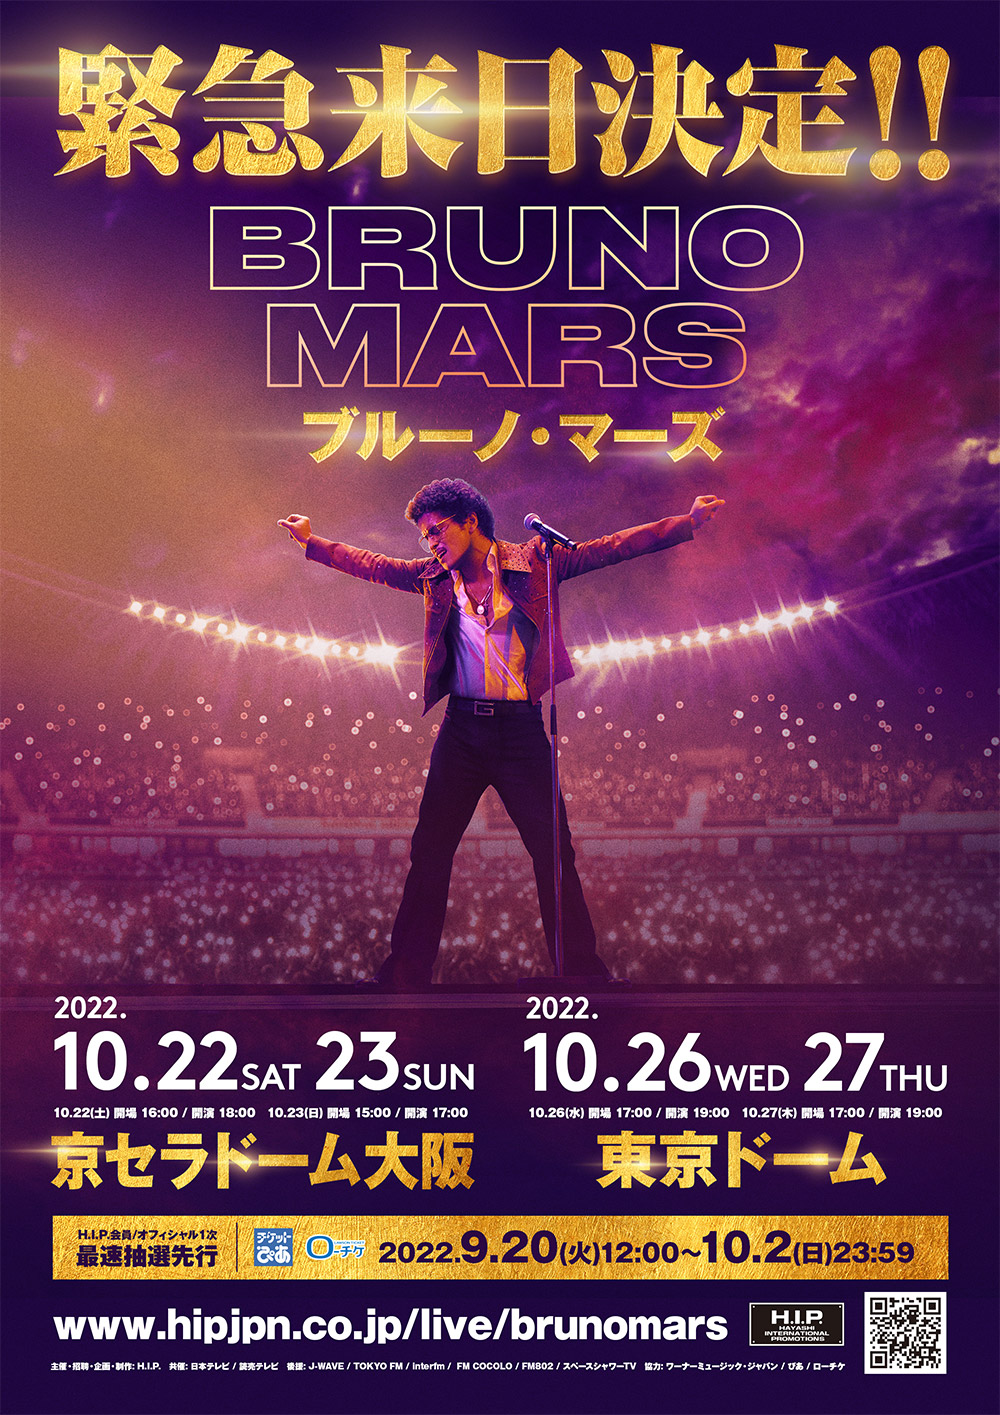 Bruno Mars 東京ドーム ss 席 - 施設利用券